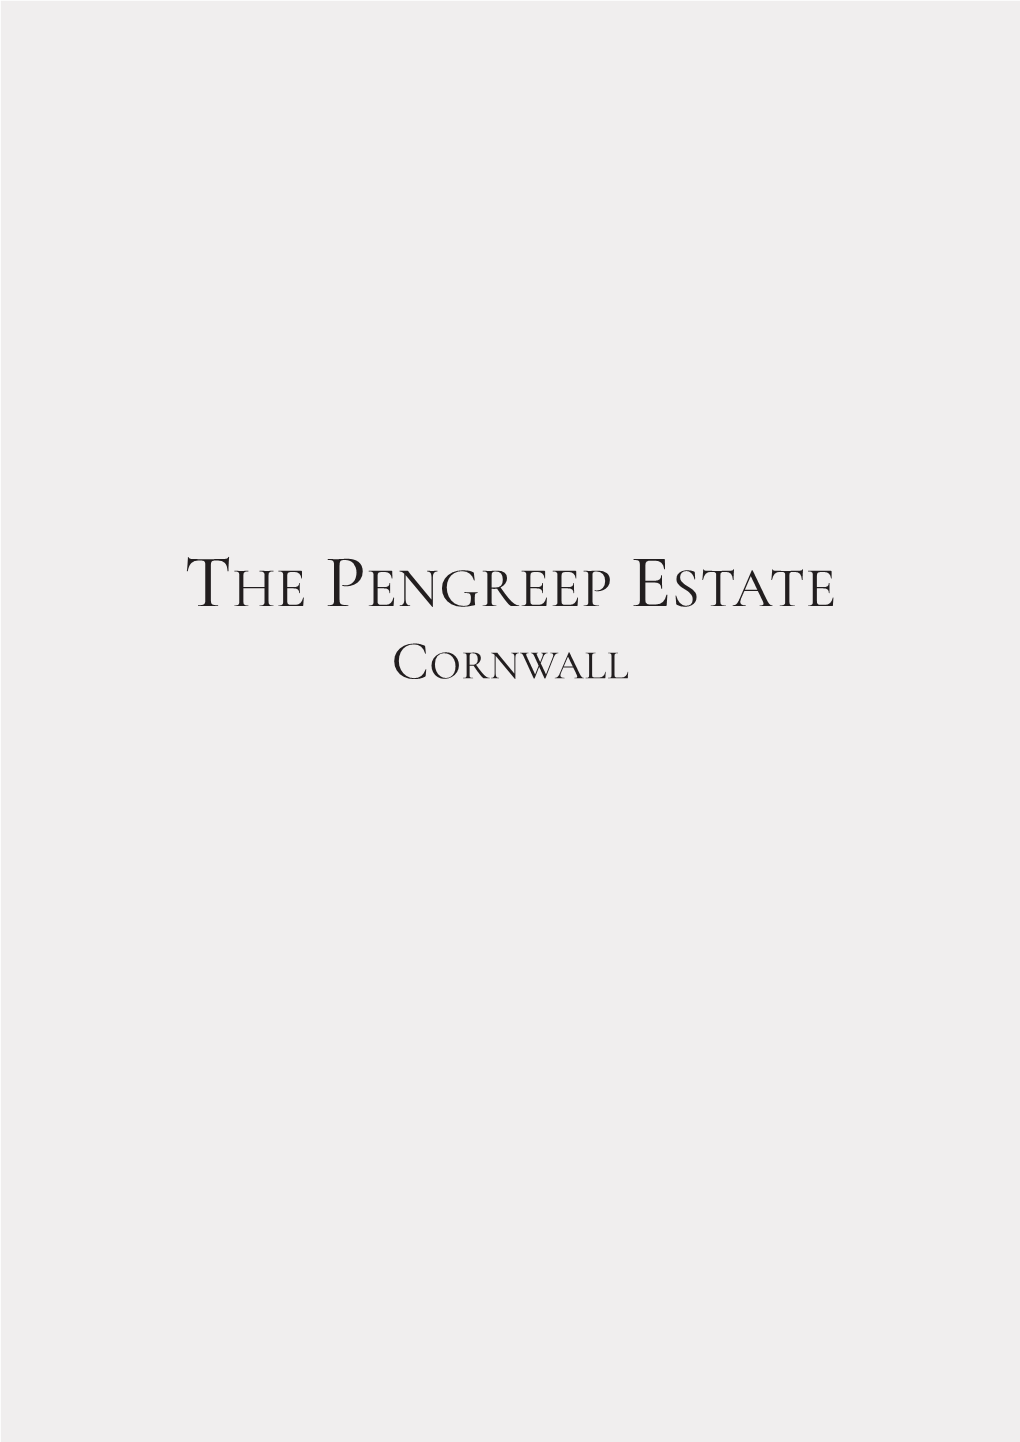 THE PENGREEP ESTATE CORNWALL the Pengreep Estate, Ponsanooth, Truro TR3 7JH